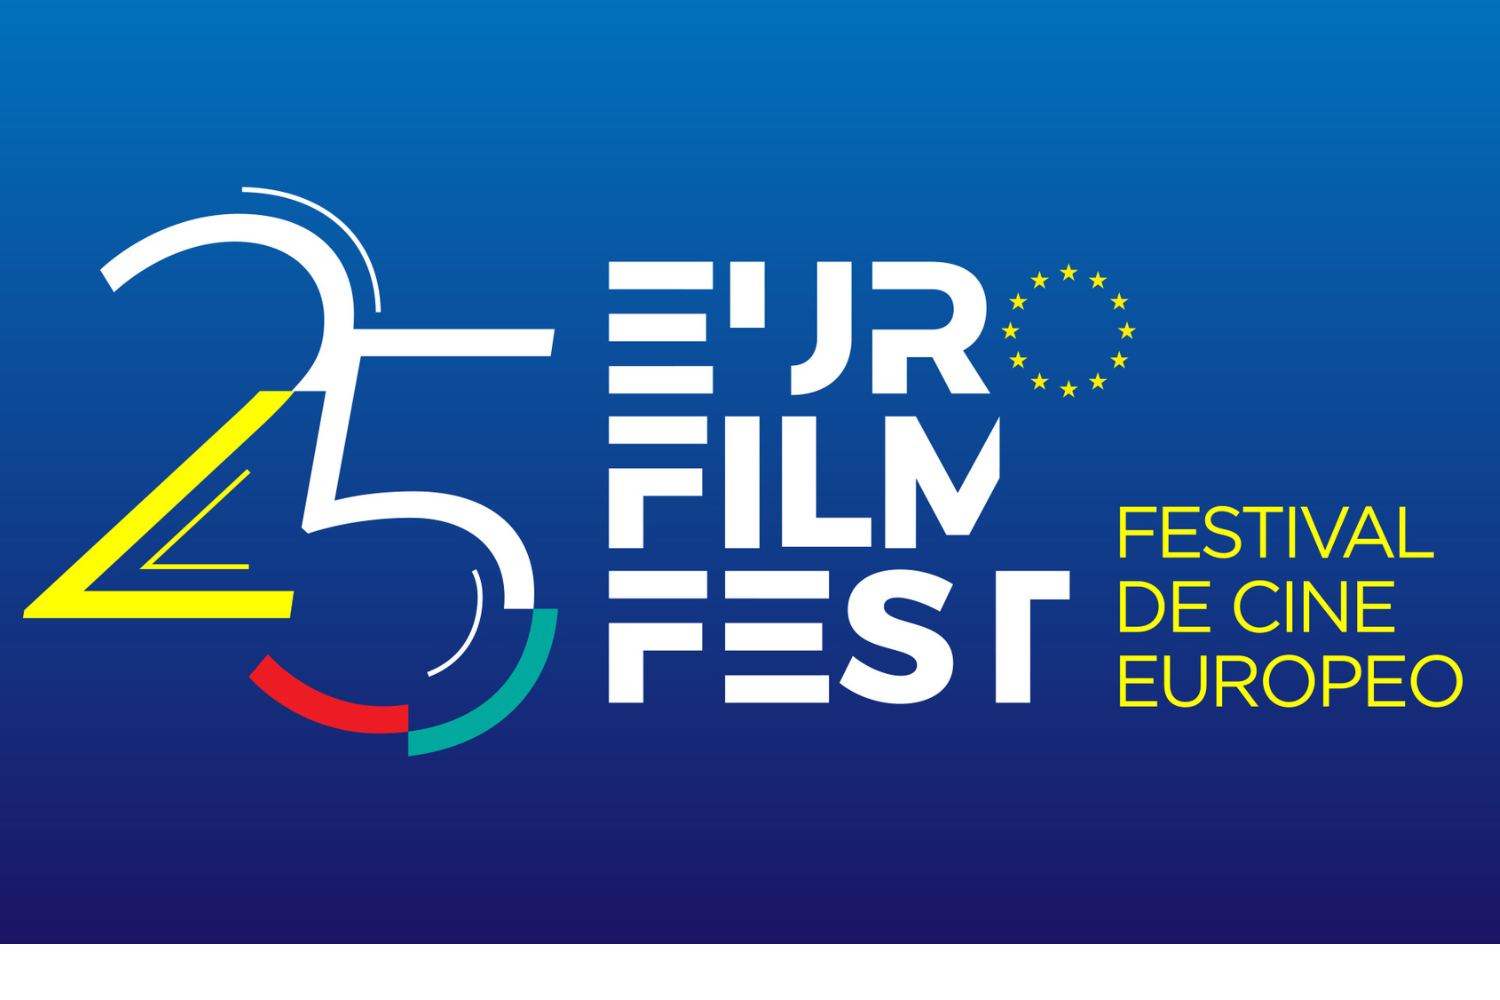 Festival de cine europeo